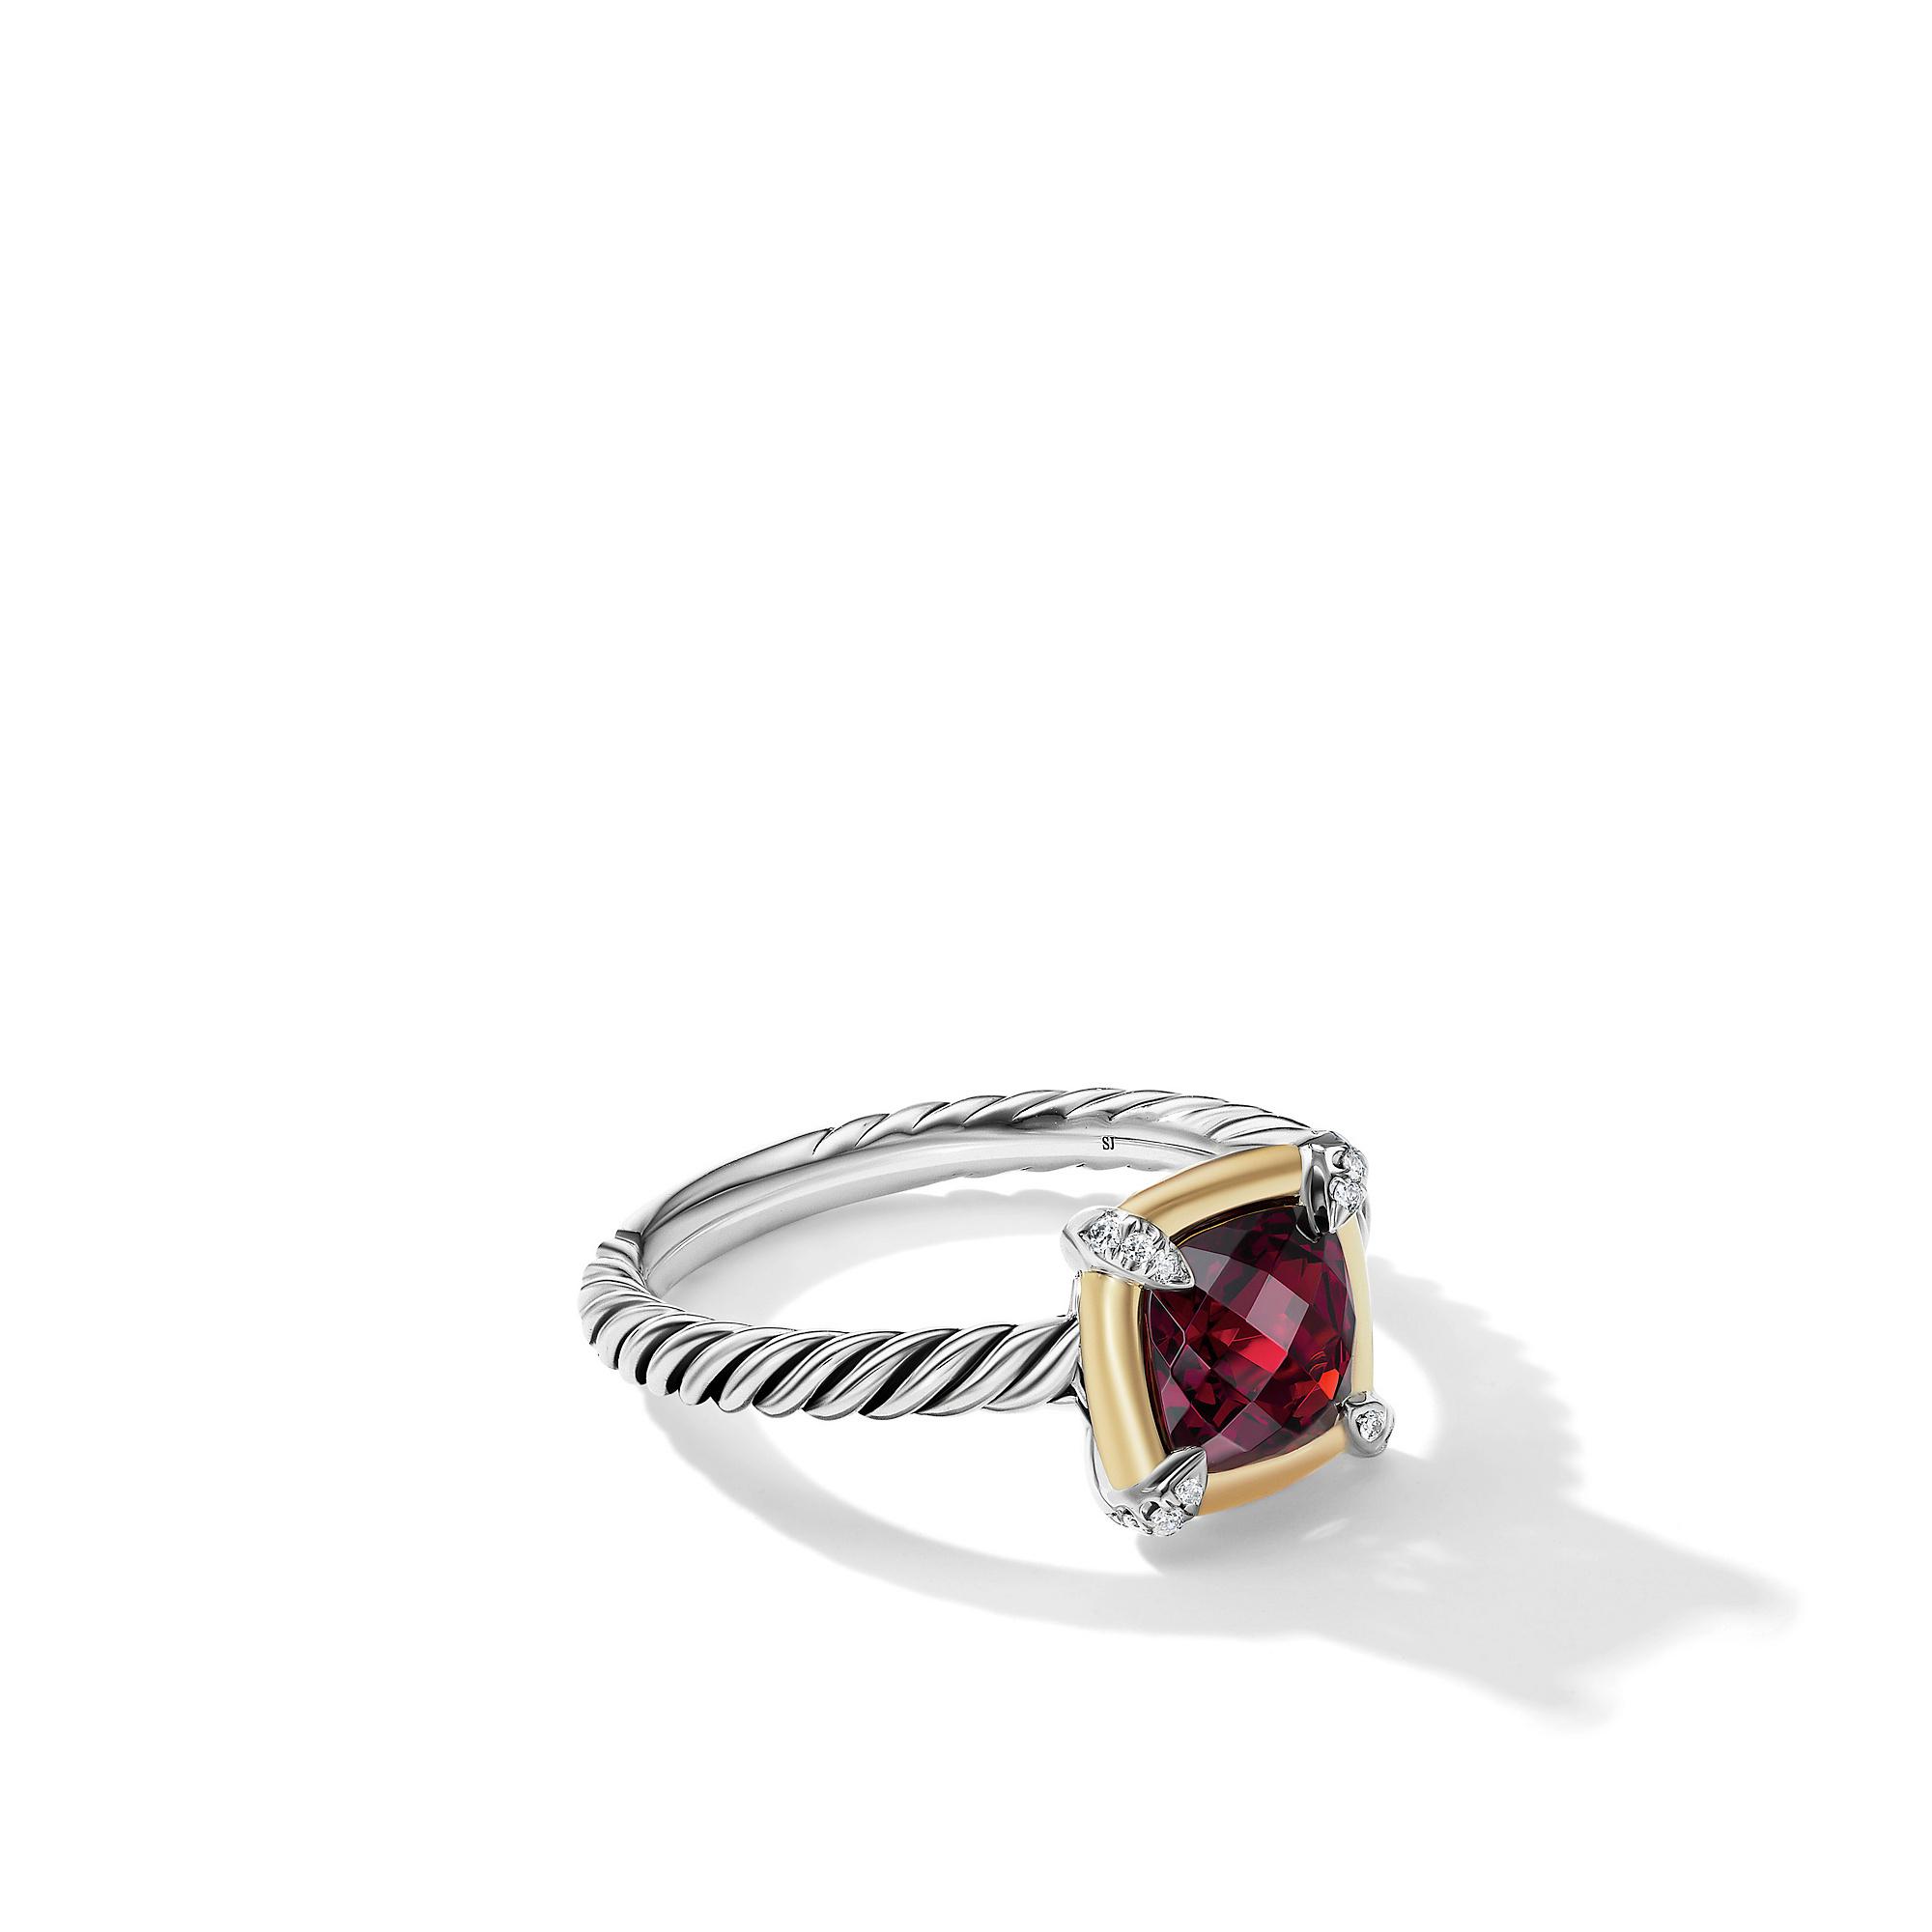 David Yurman Petite Chatelaine Ring with Garnet and Pave Diamonds, size 6.5